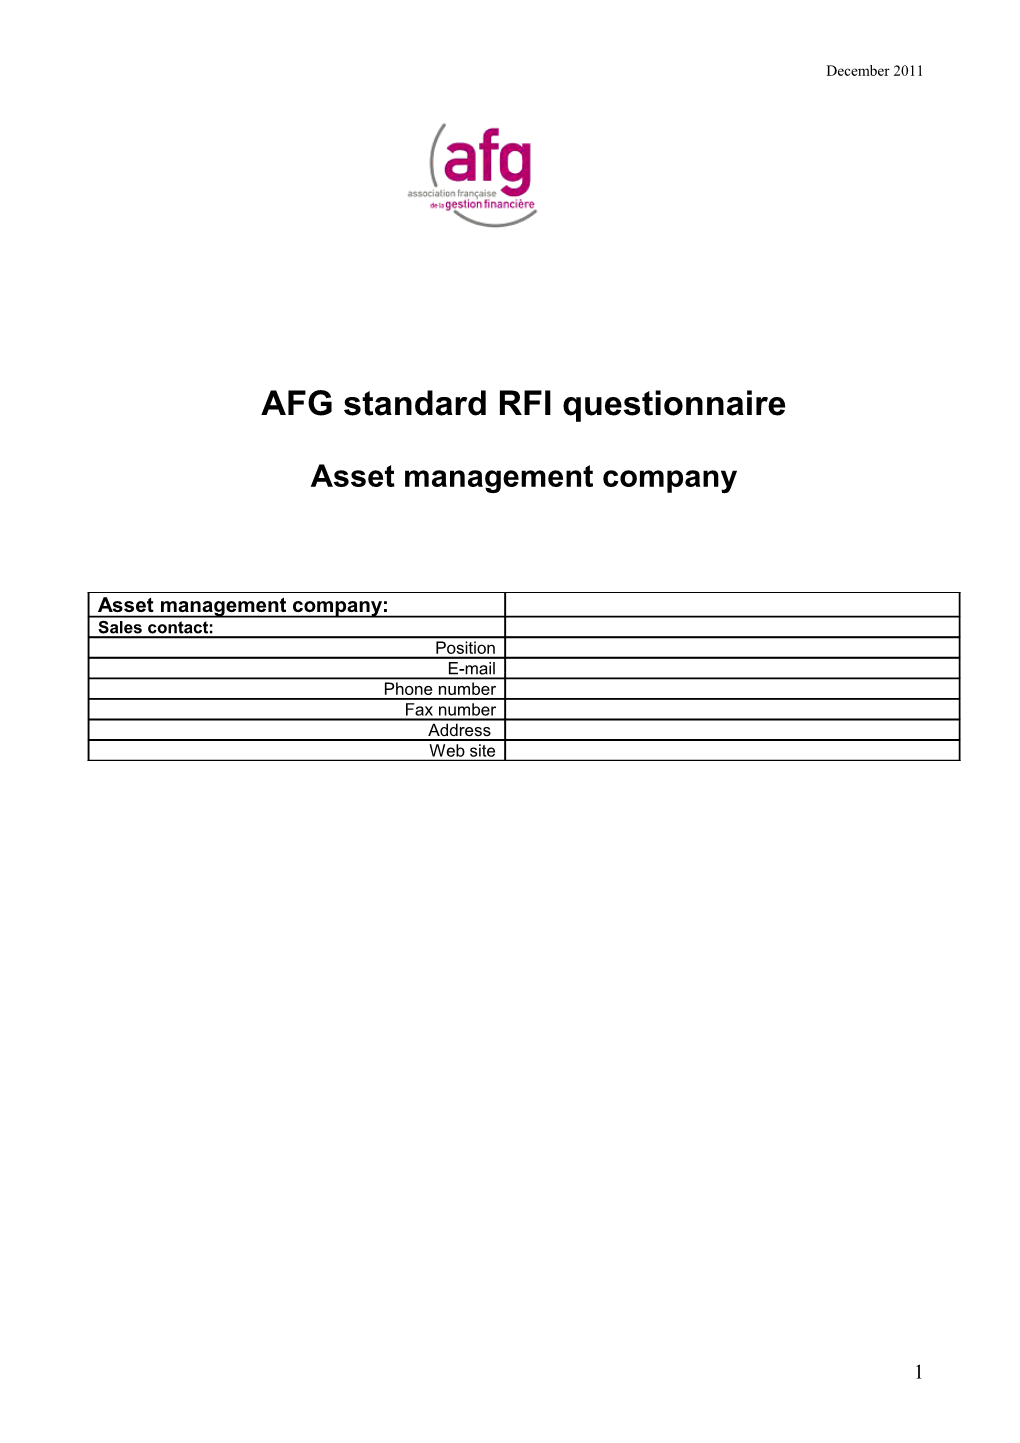 AFG Standard RFI Questionnaire